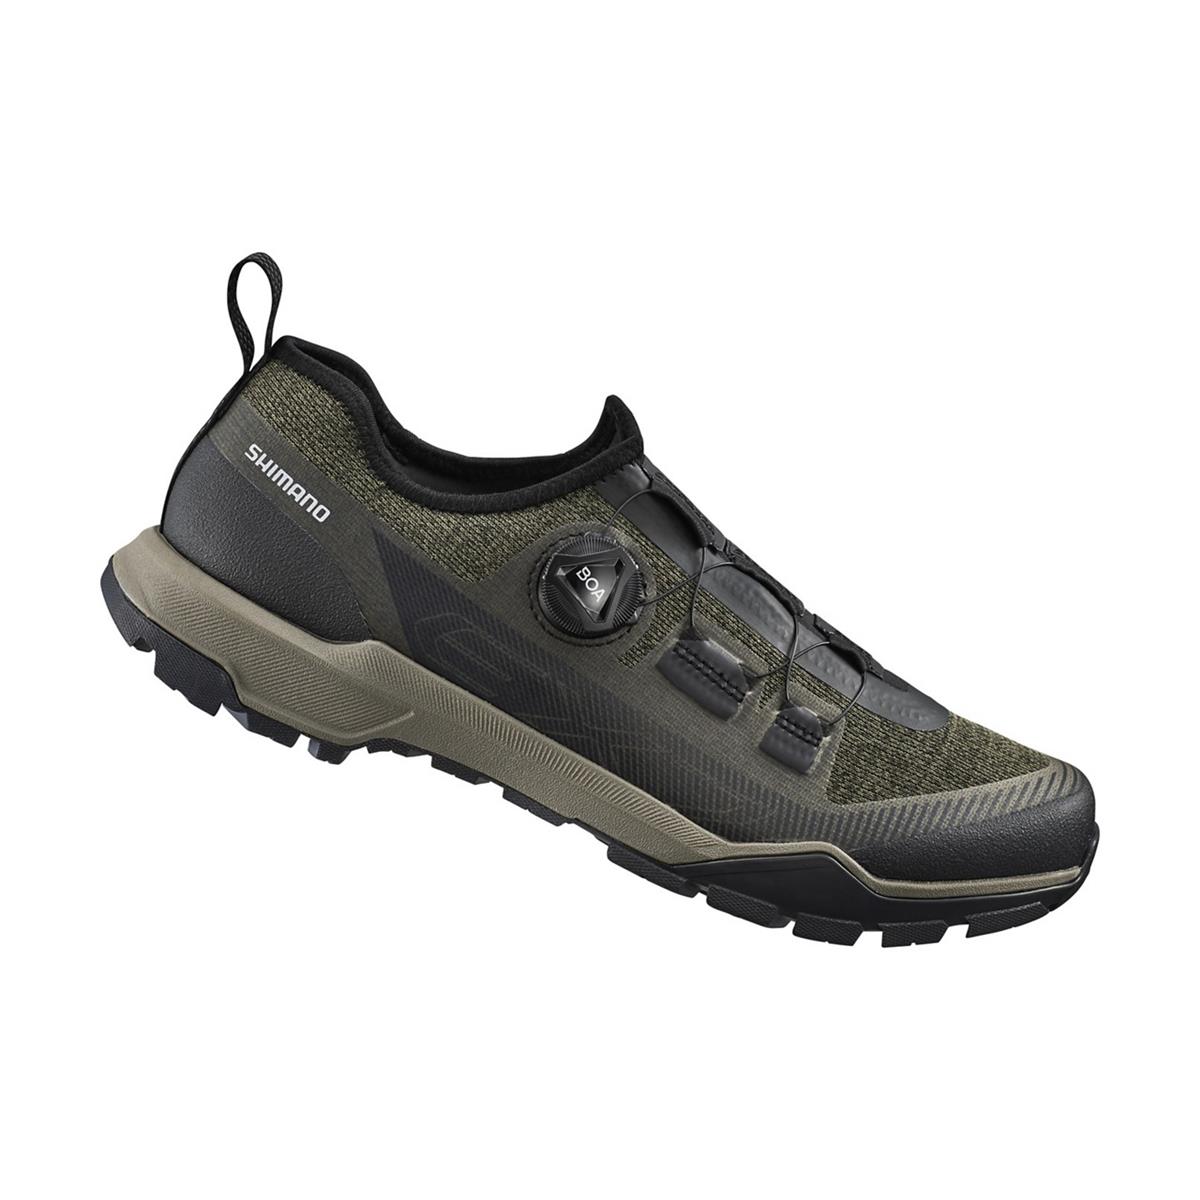 Trekking / MTB Shoes SH-EX700 Green Size 45